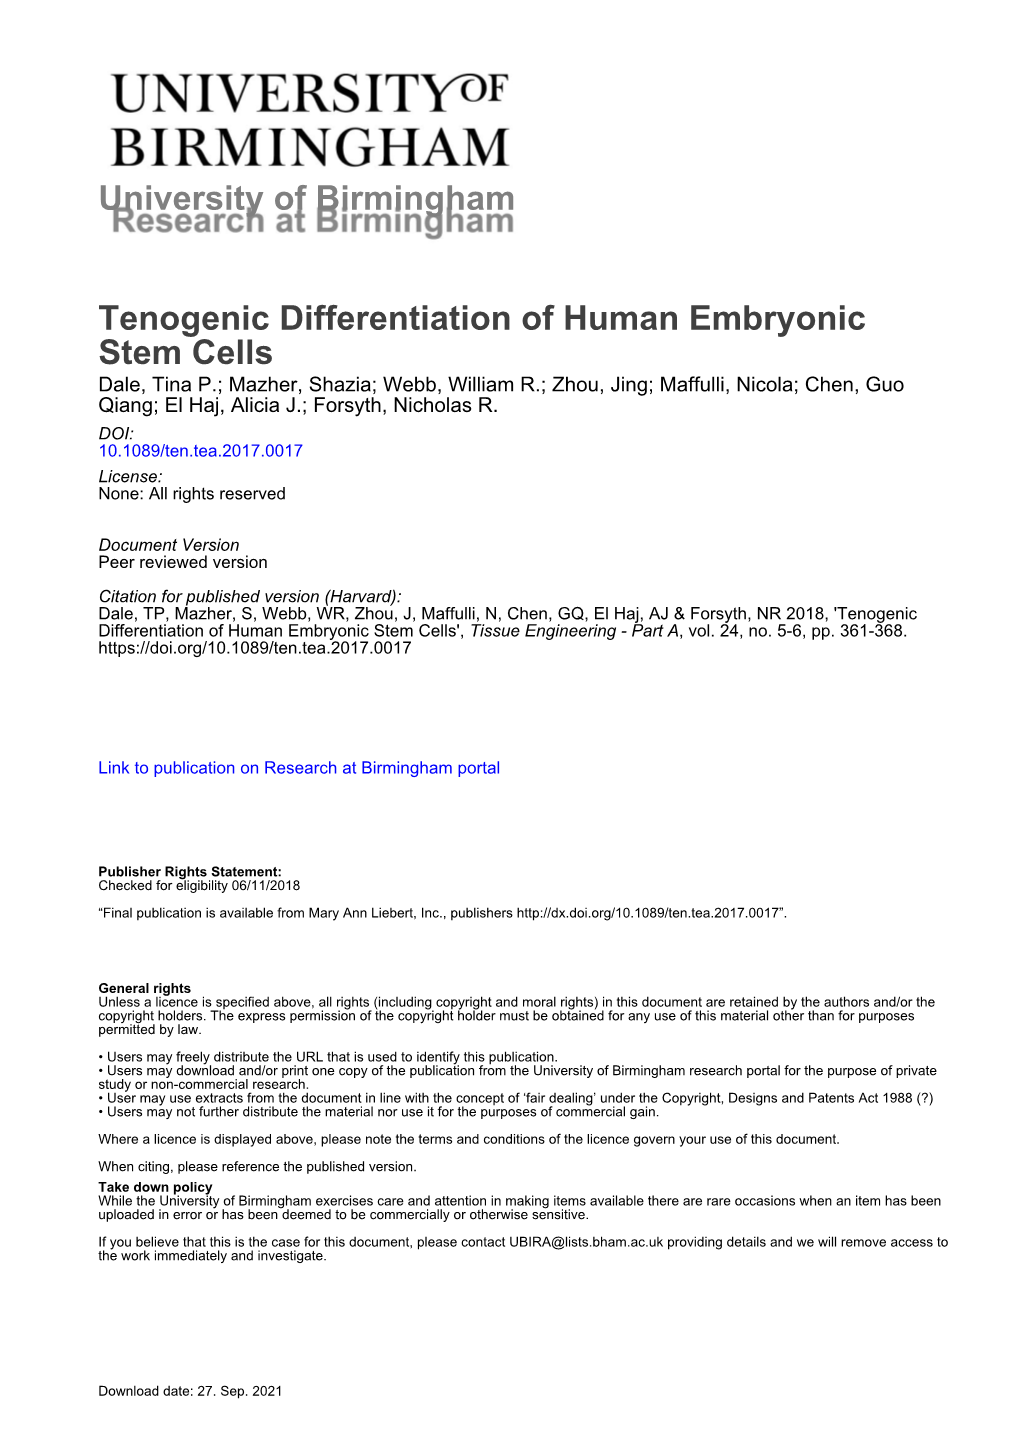 University of Birmingham Tenogenic Differentiation of Human Embryonic